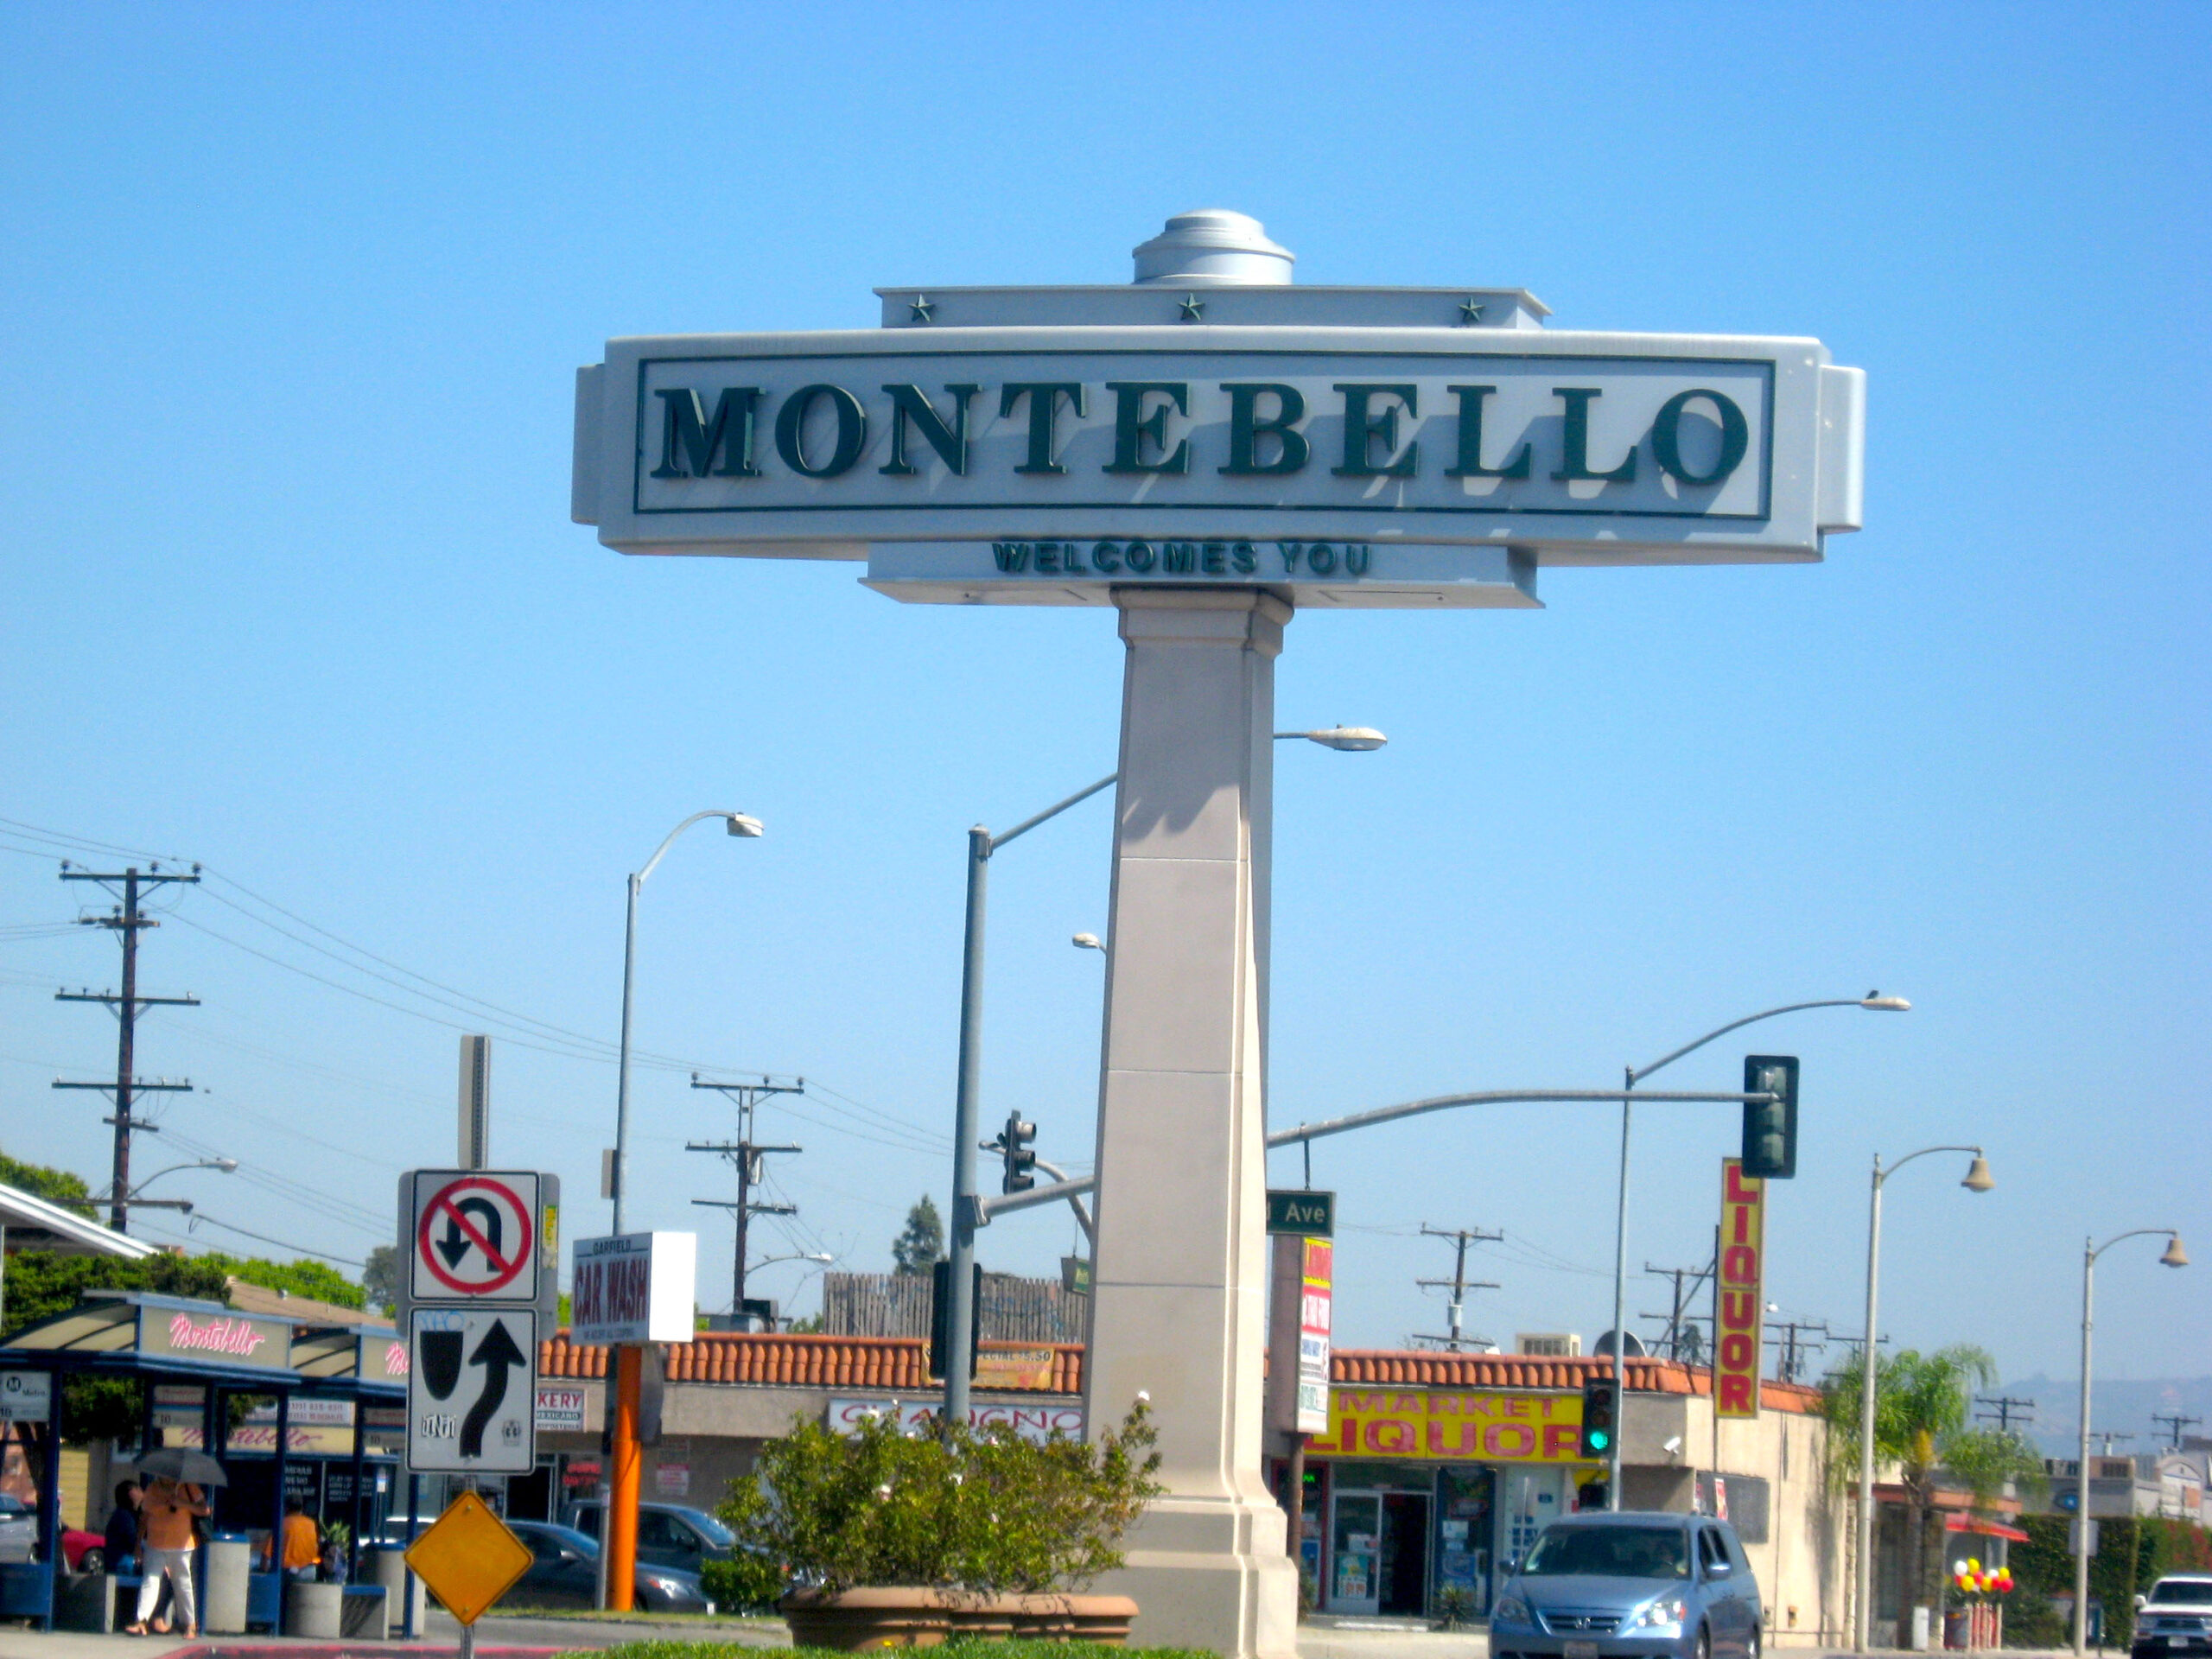 Montebello